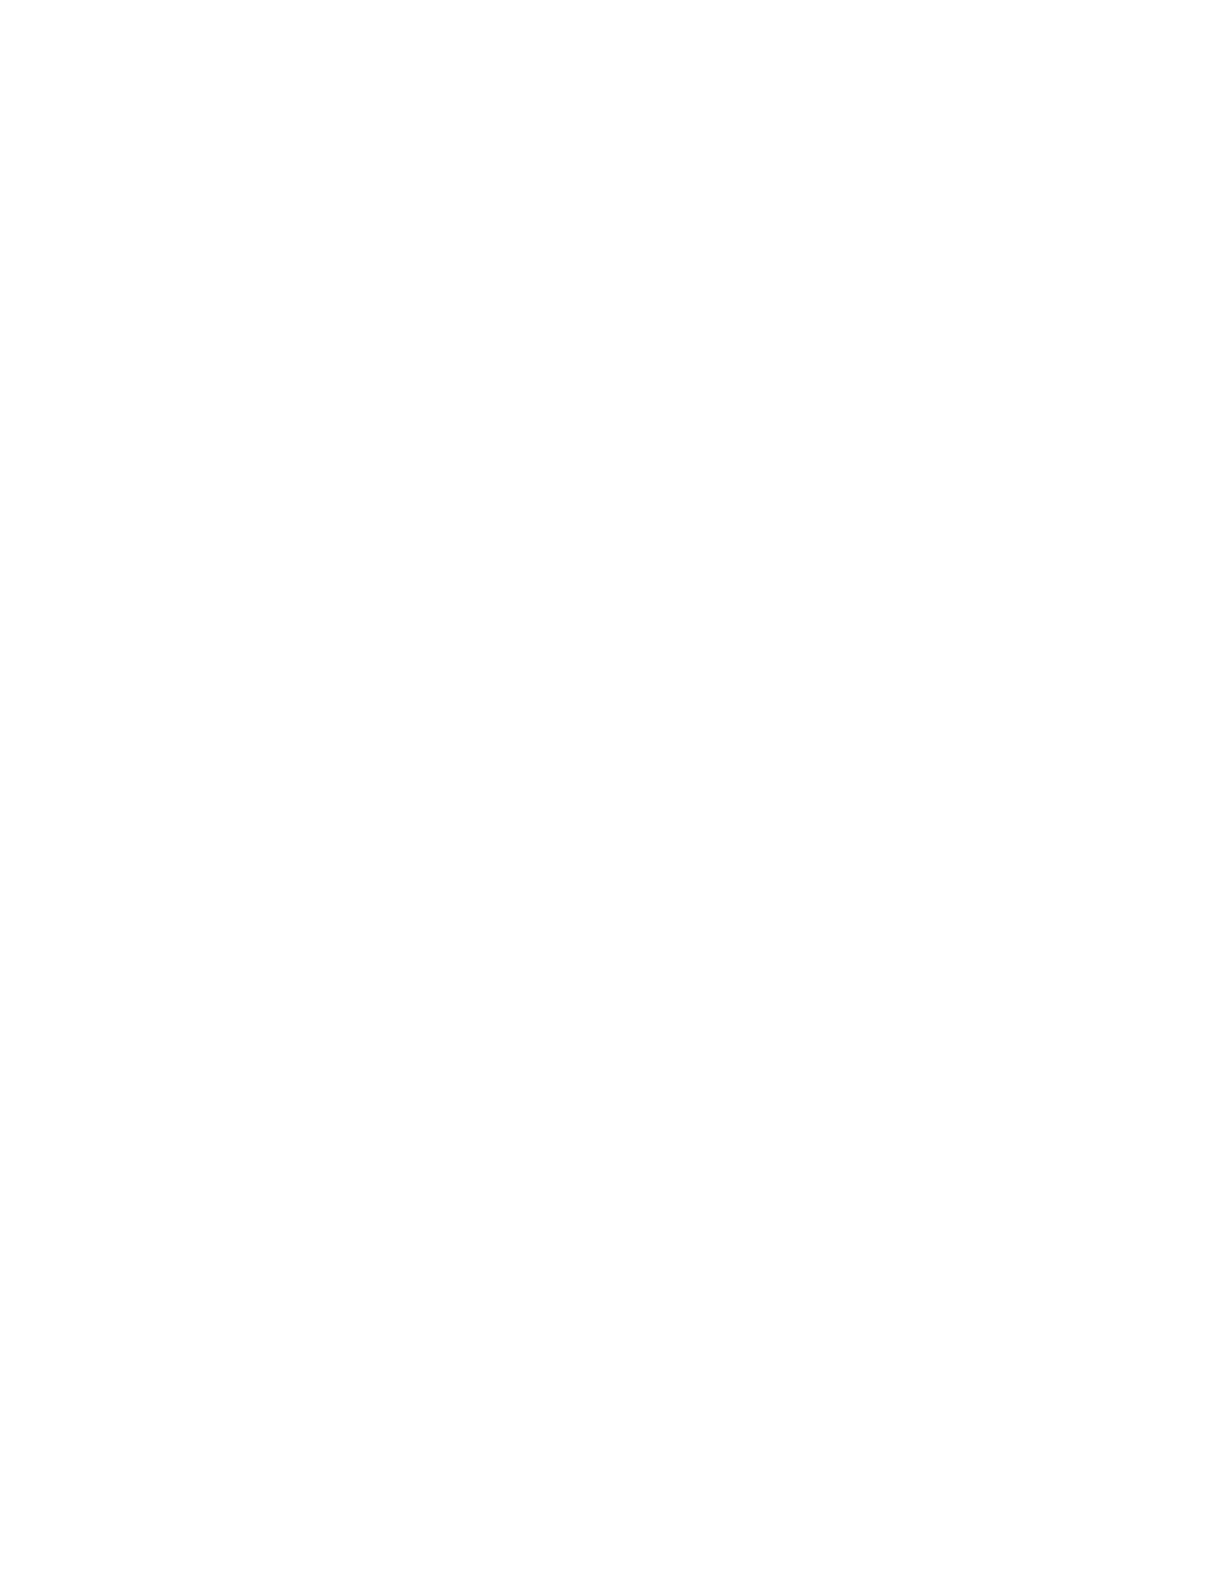 UmweltBank logo pour fonds sombres (PNG transparent)